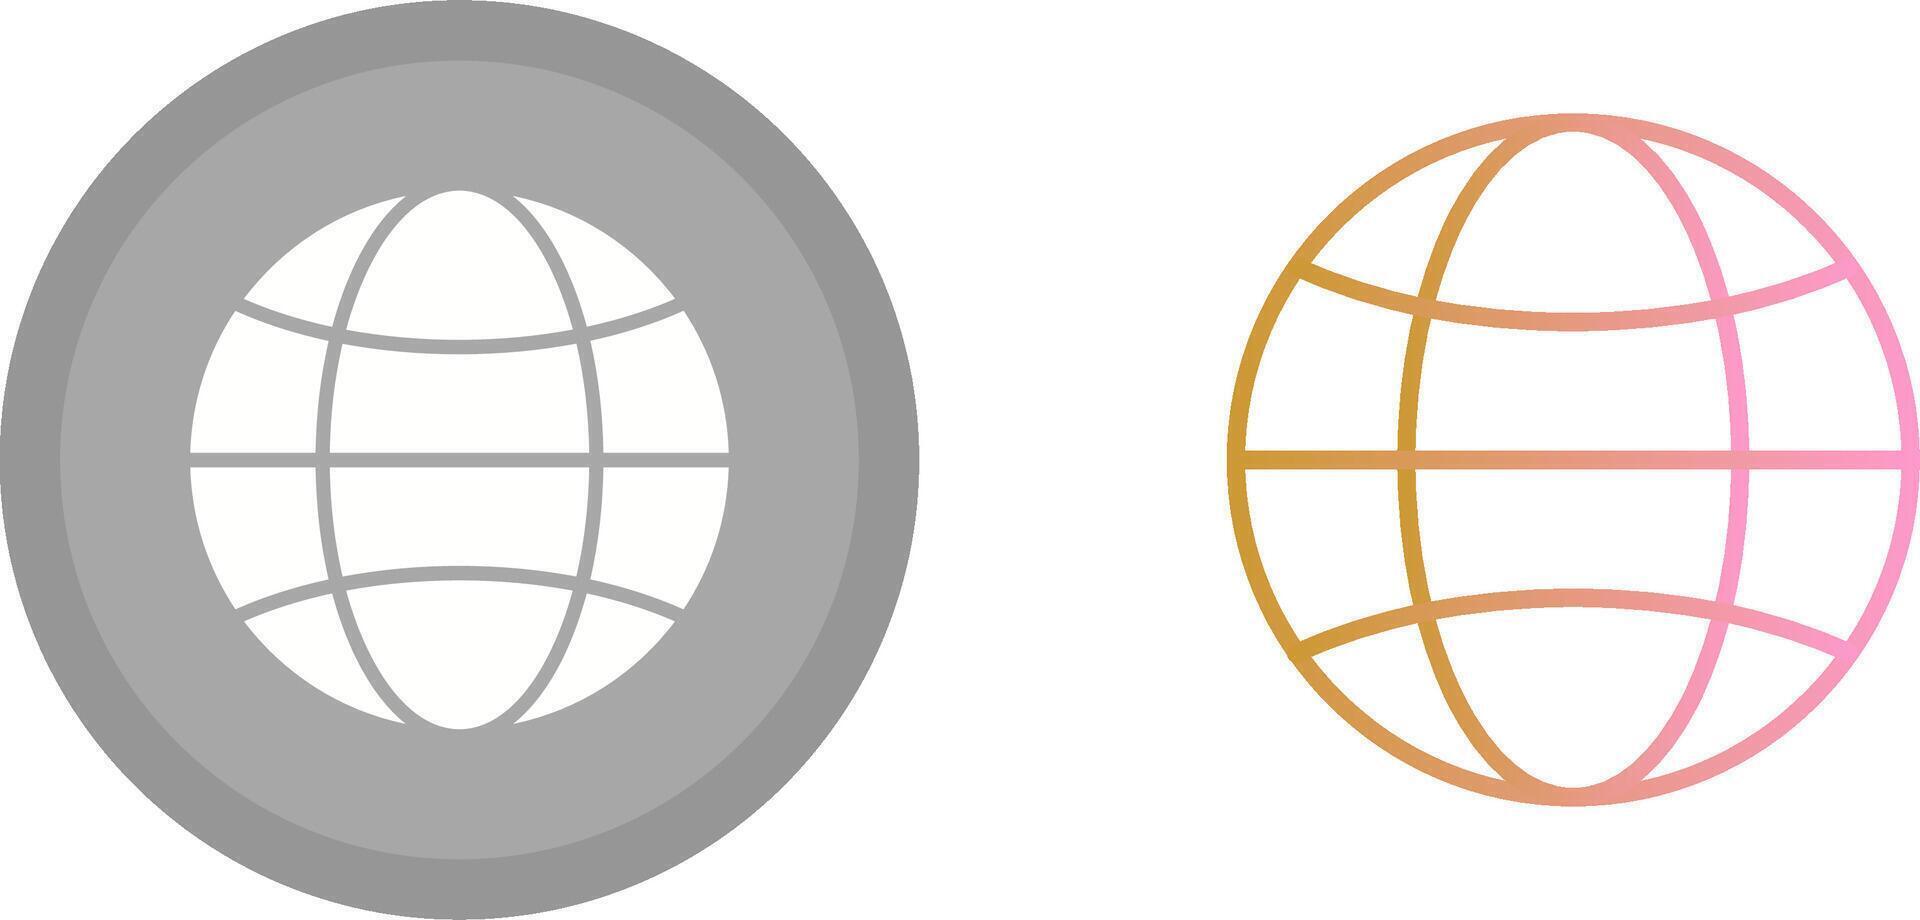 Earth Icon Design vector